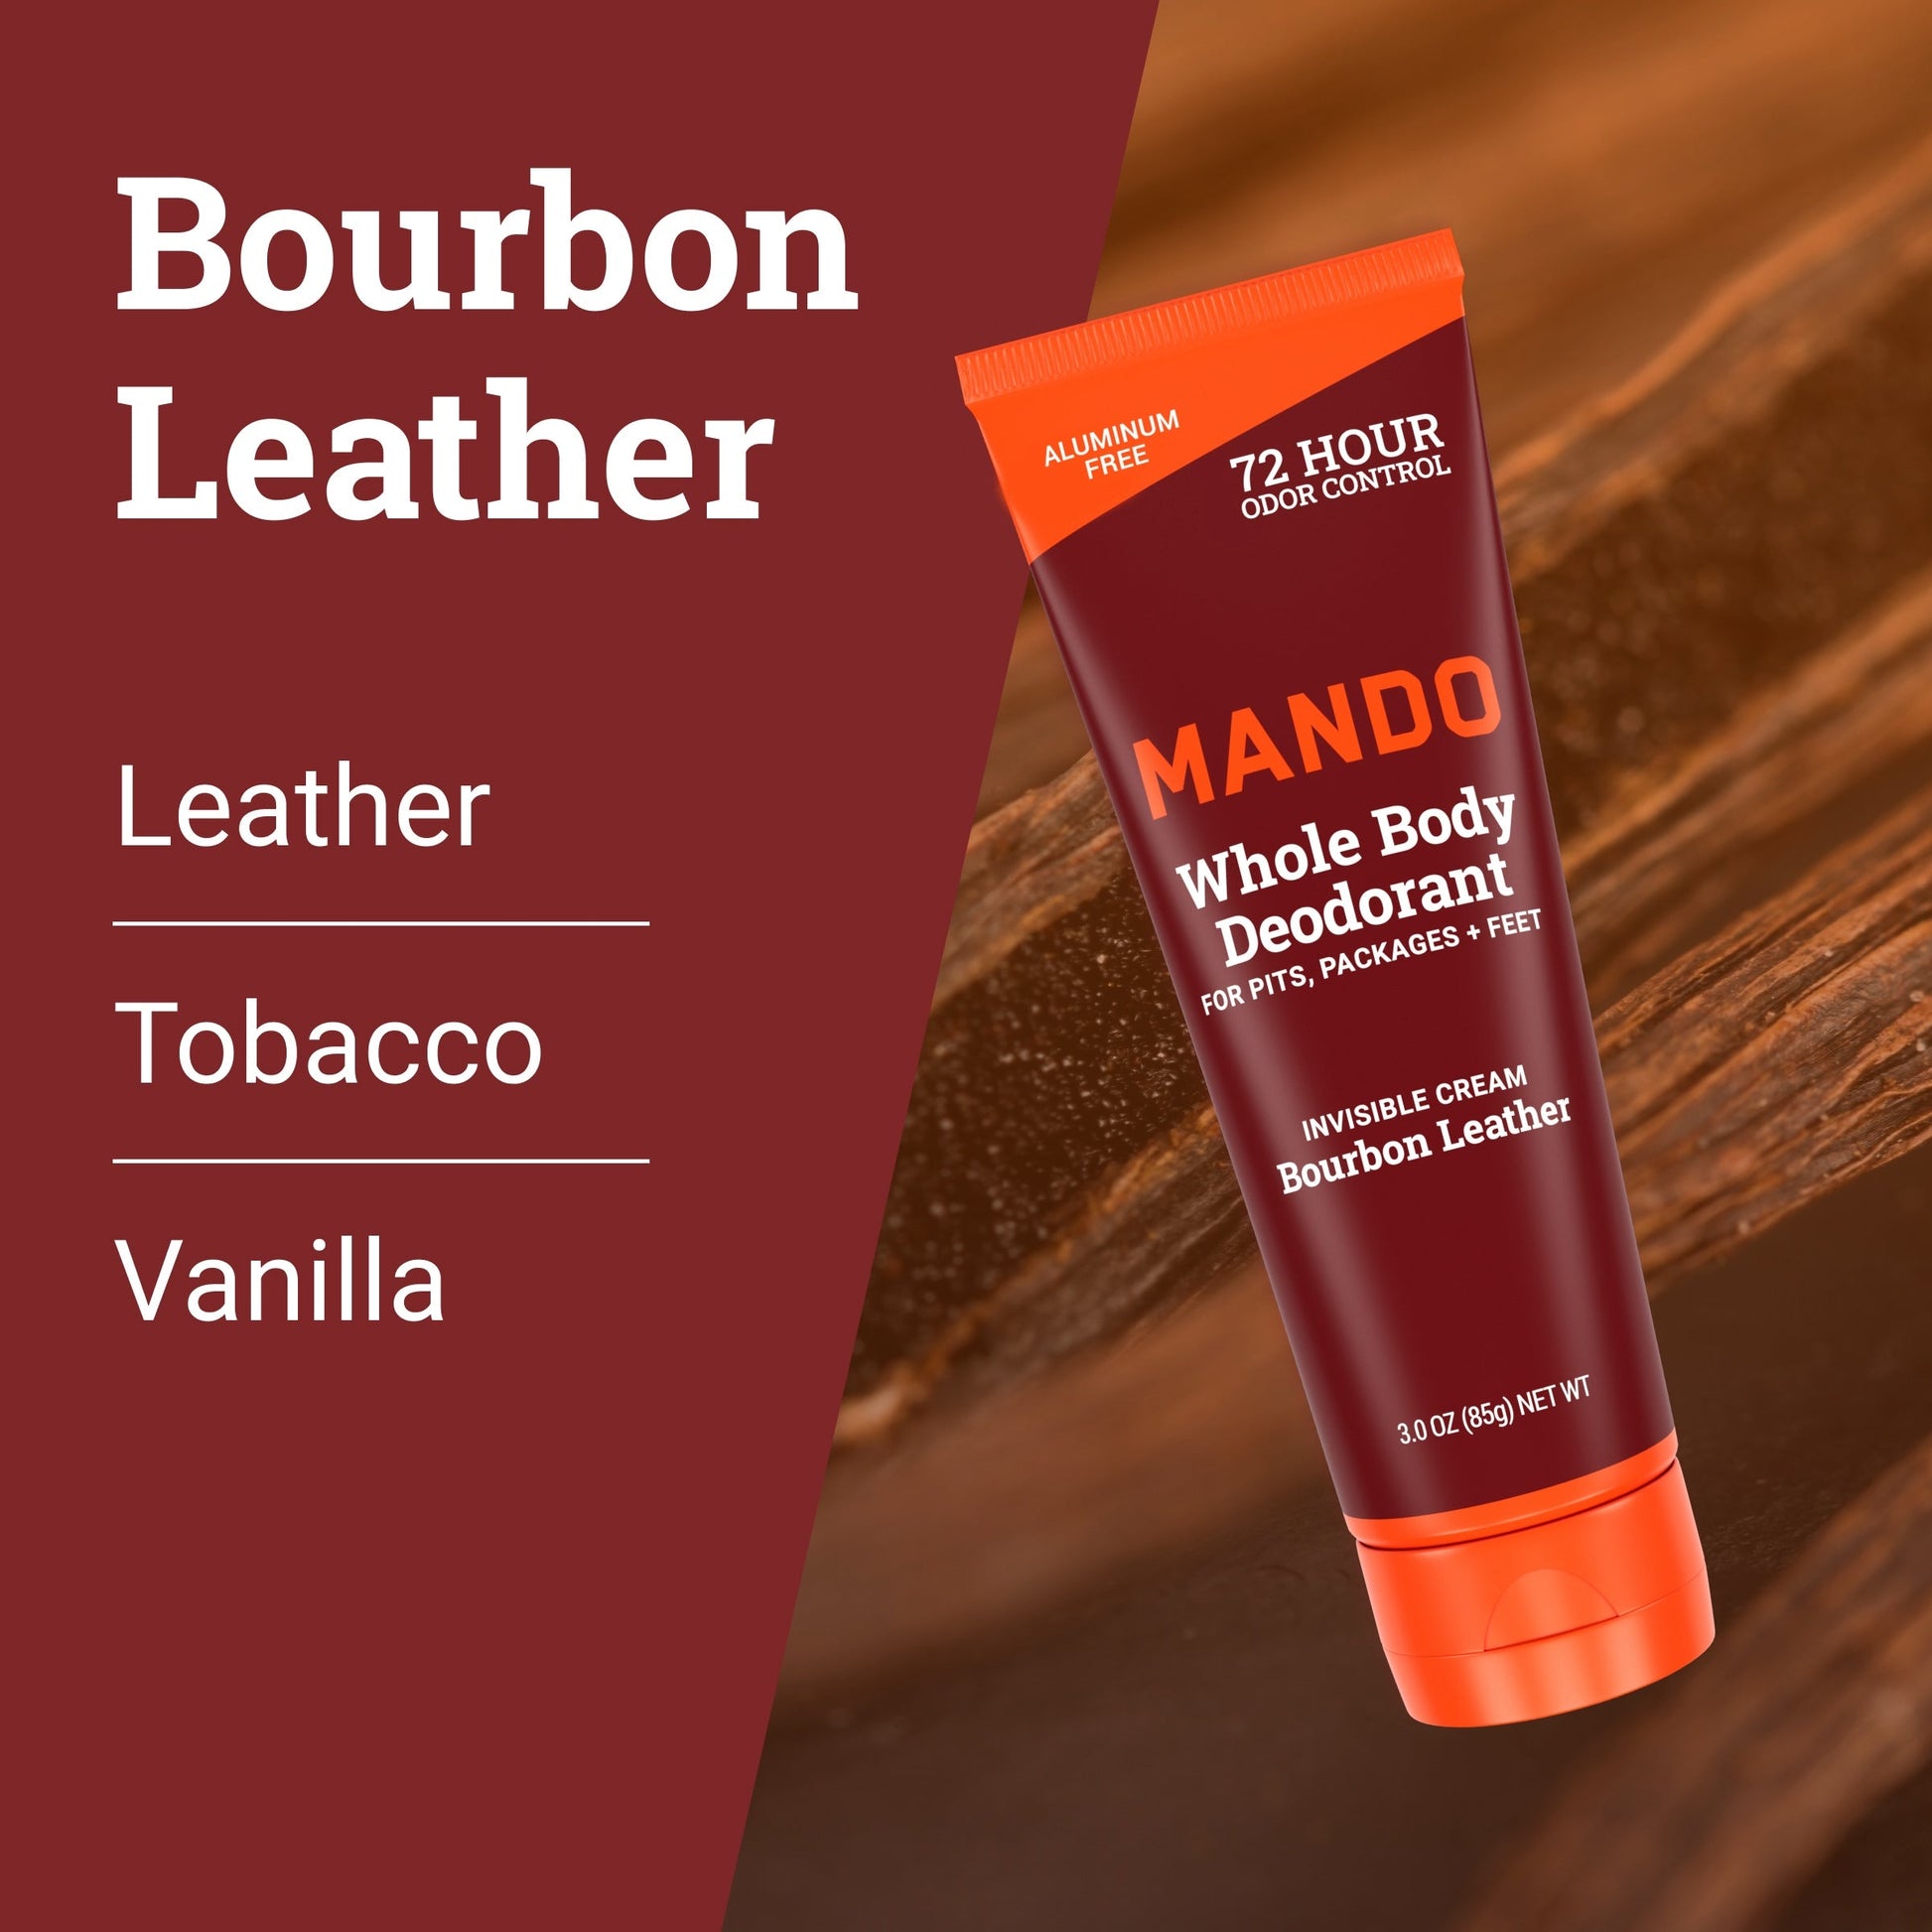 Mando cream deodorant stick in bourbon leather with text: leather, tobacco, vanilla